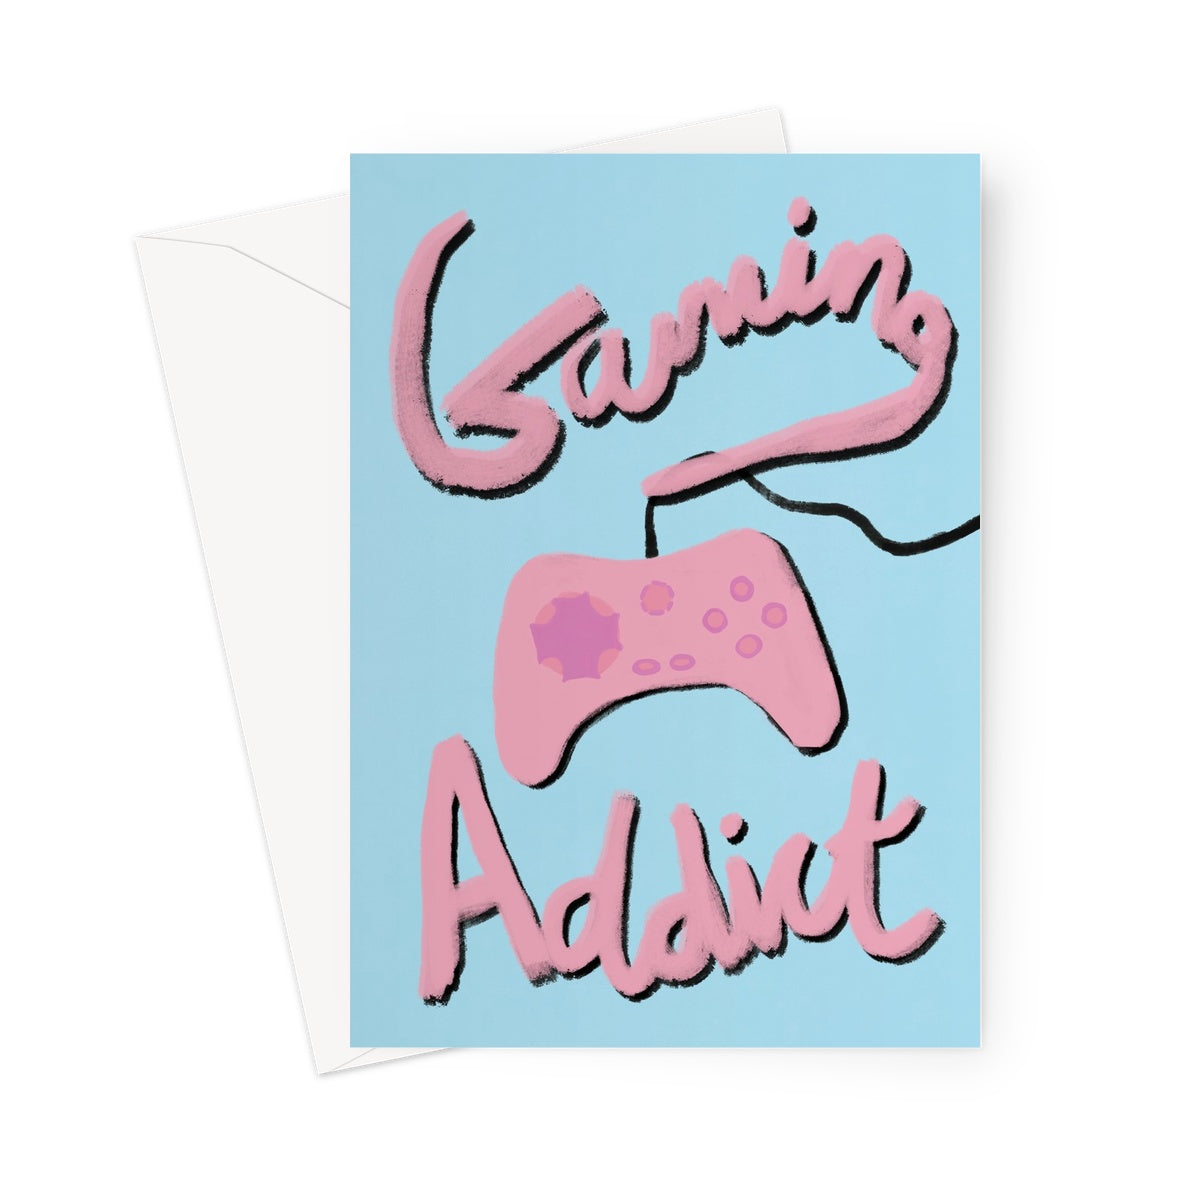 Gaming Addict Print - Light Blue, Pink Greeting Card